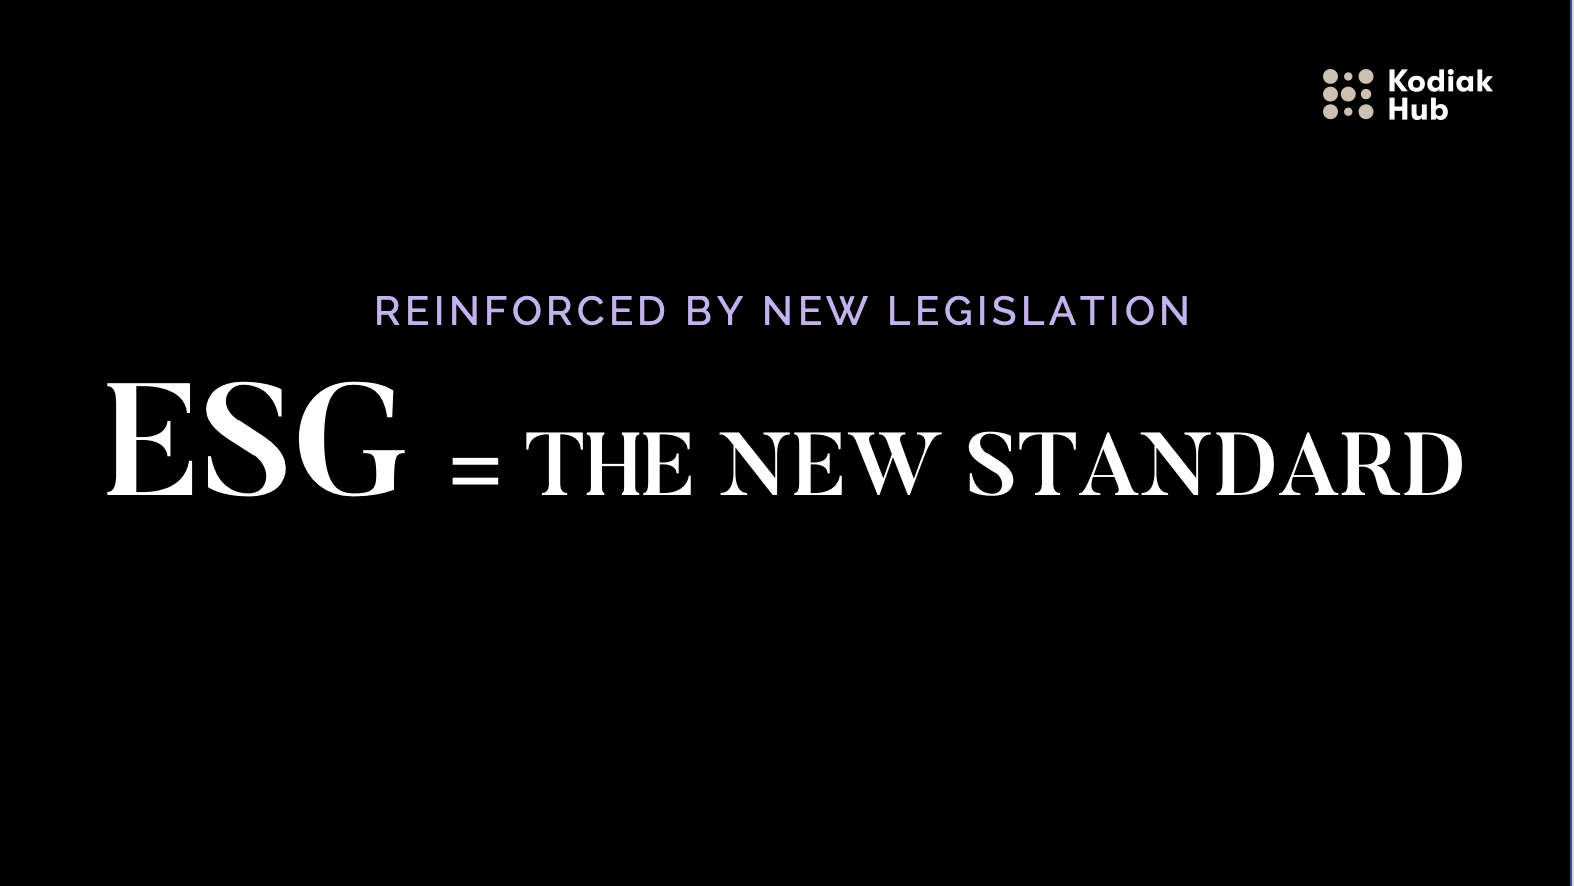 ESG is the new standard reinforced by legislation